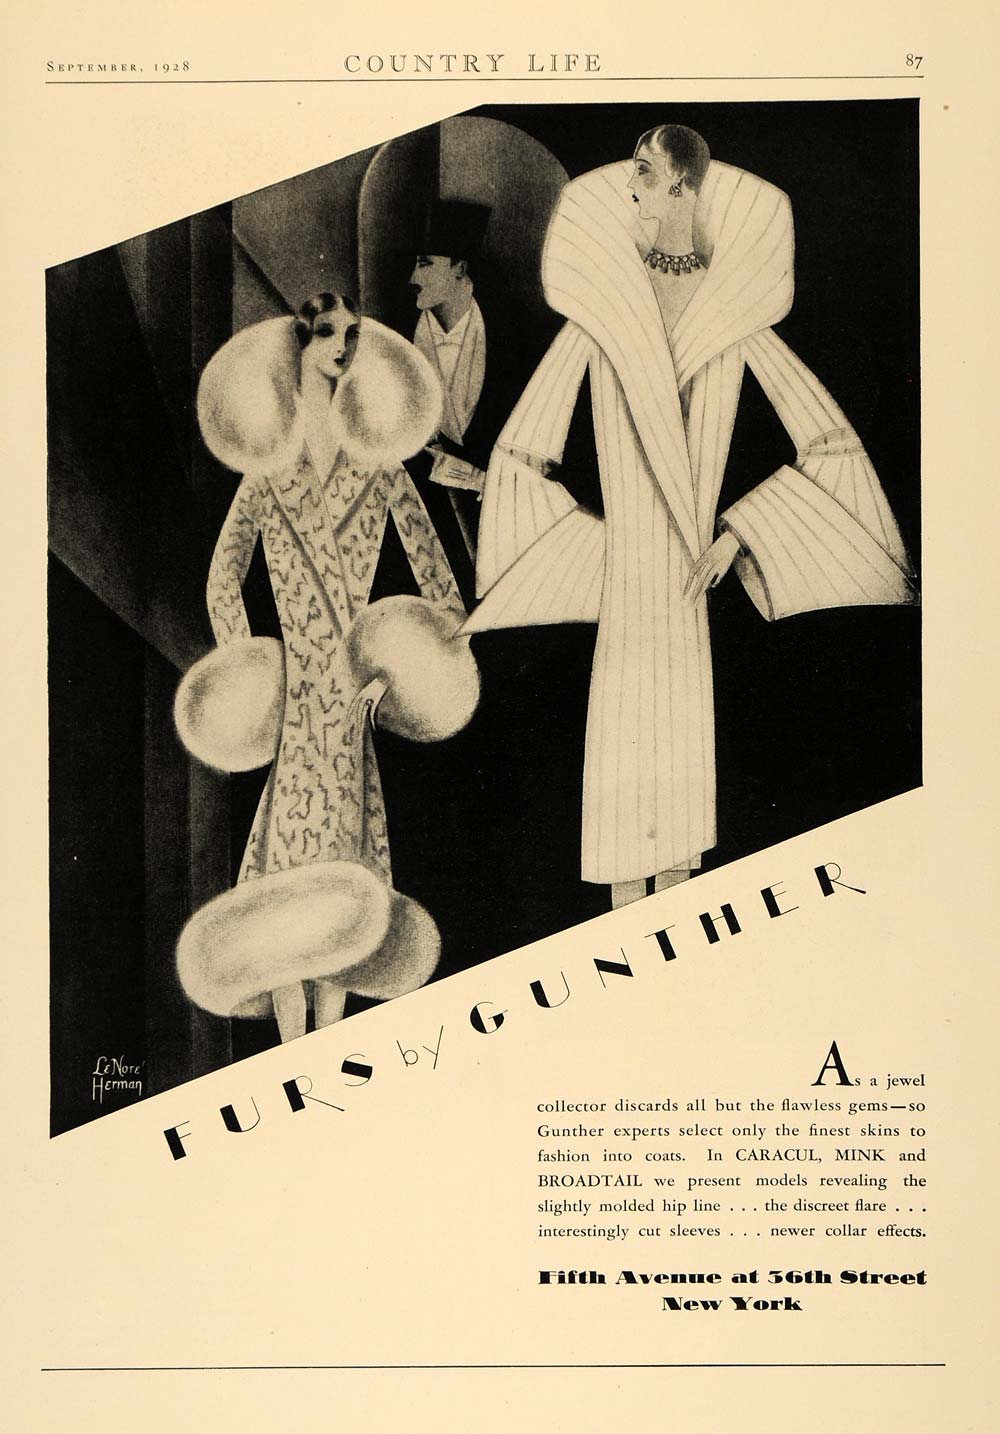 1930 Ad Regent Stanley Duttenhofer Shoe High Heel Women Fashion